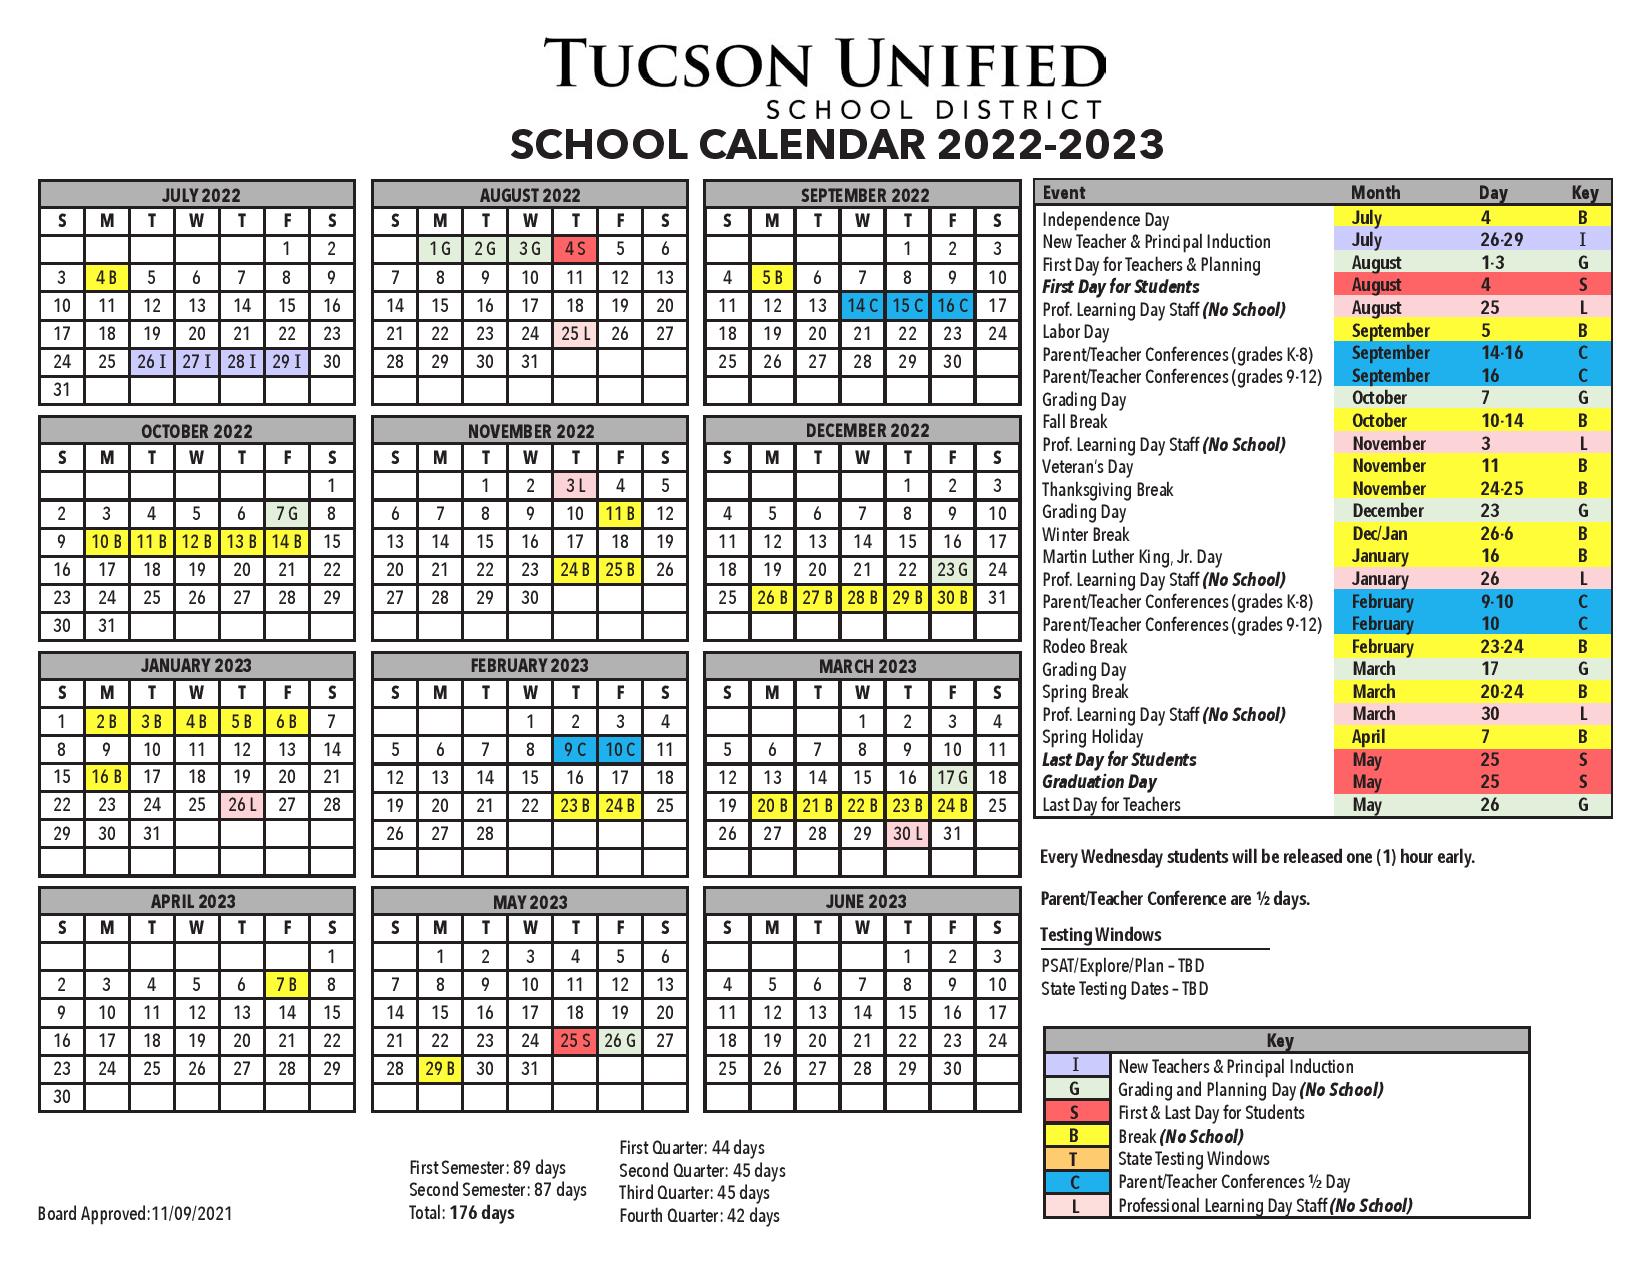 Tucson Unified School District Calendar 2022 2023